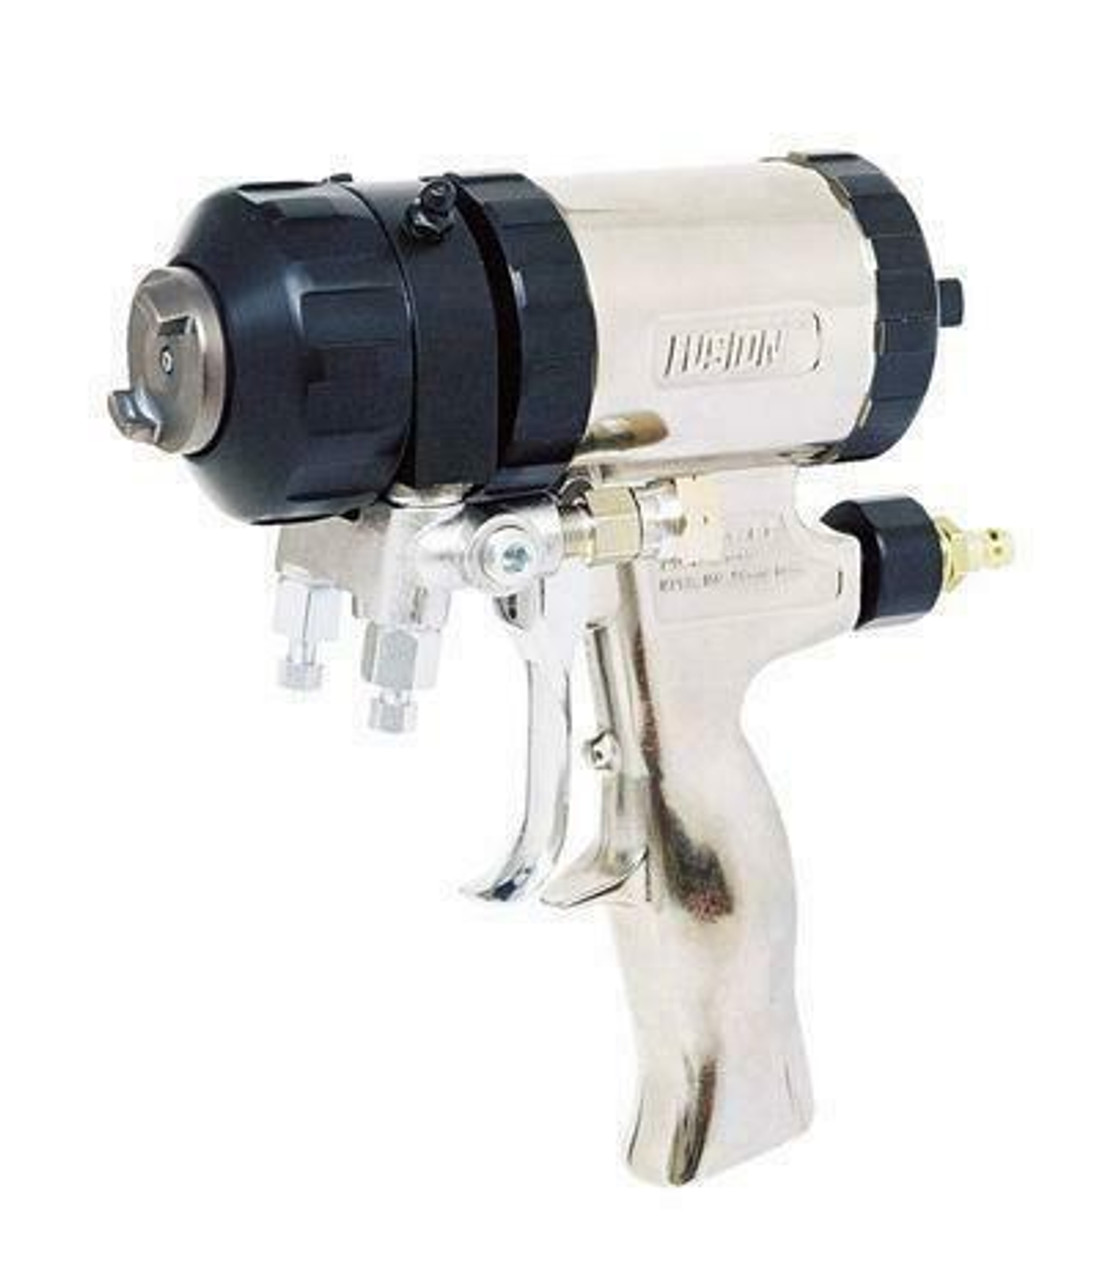 Abure A5 Round Pattern Spray Gun For Spray Foam Insulation Applications, 6  Flow Rates Can Be Selected - Spray Gun - AliExpress